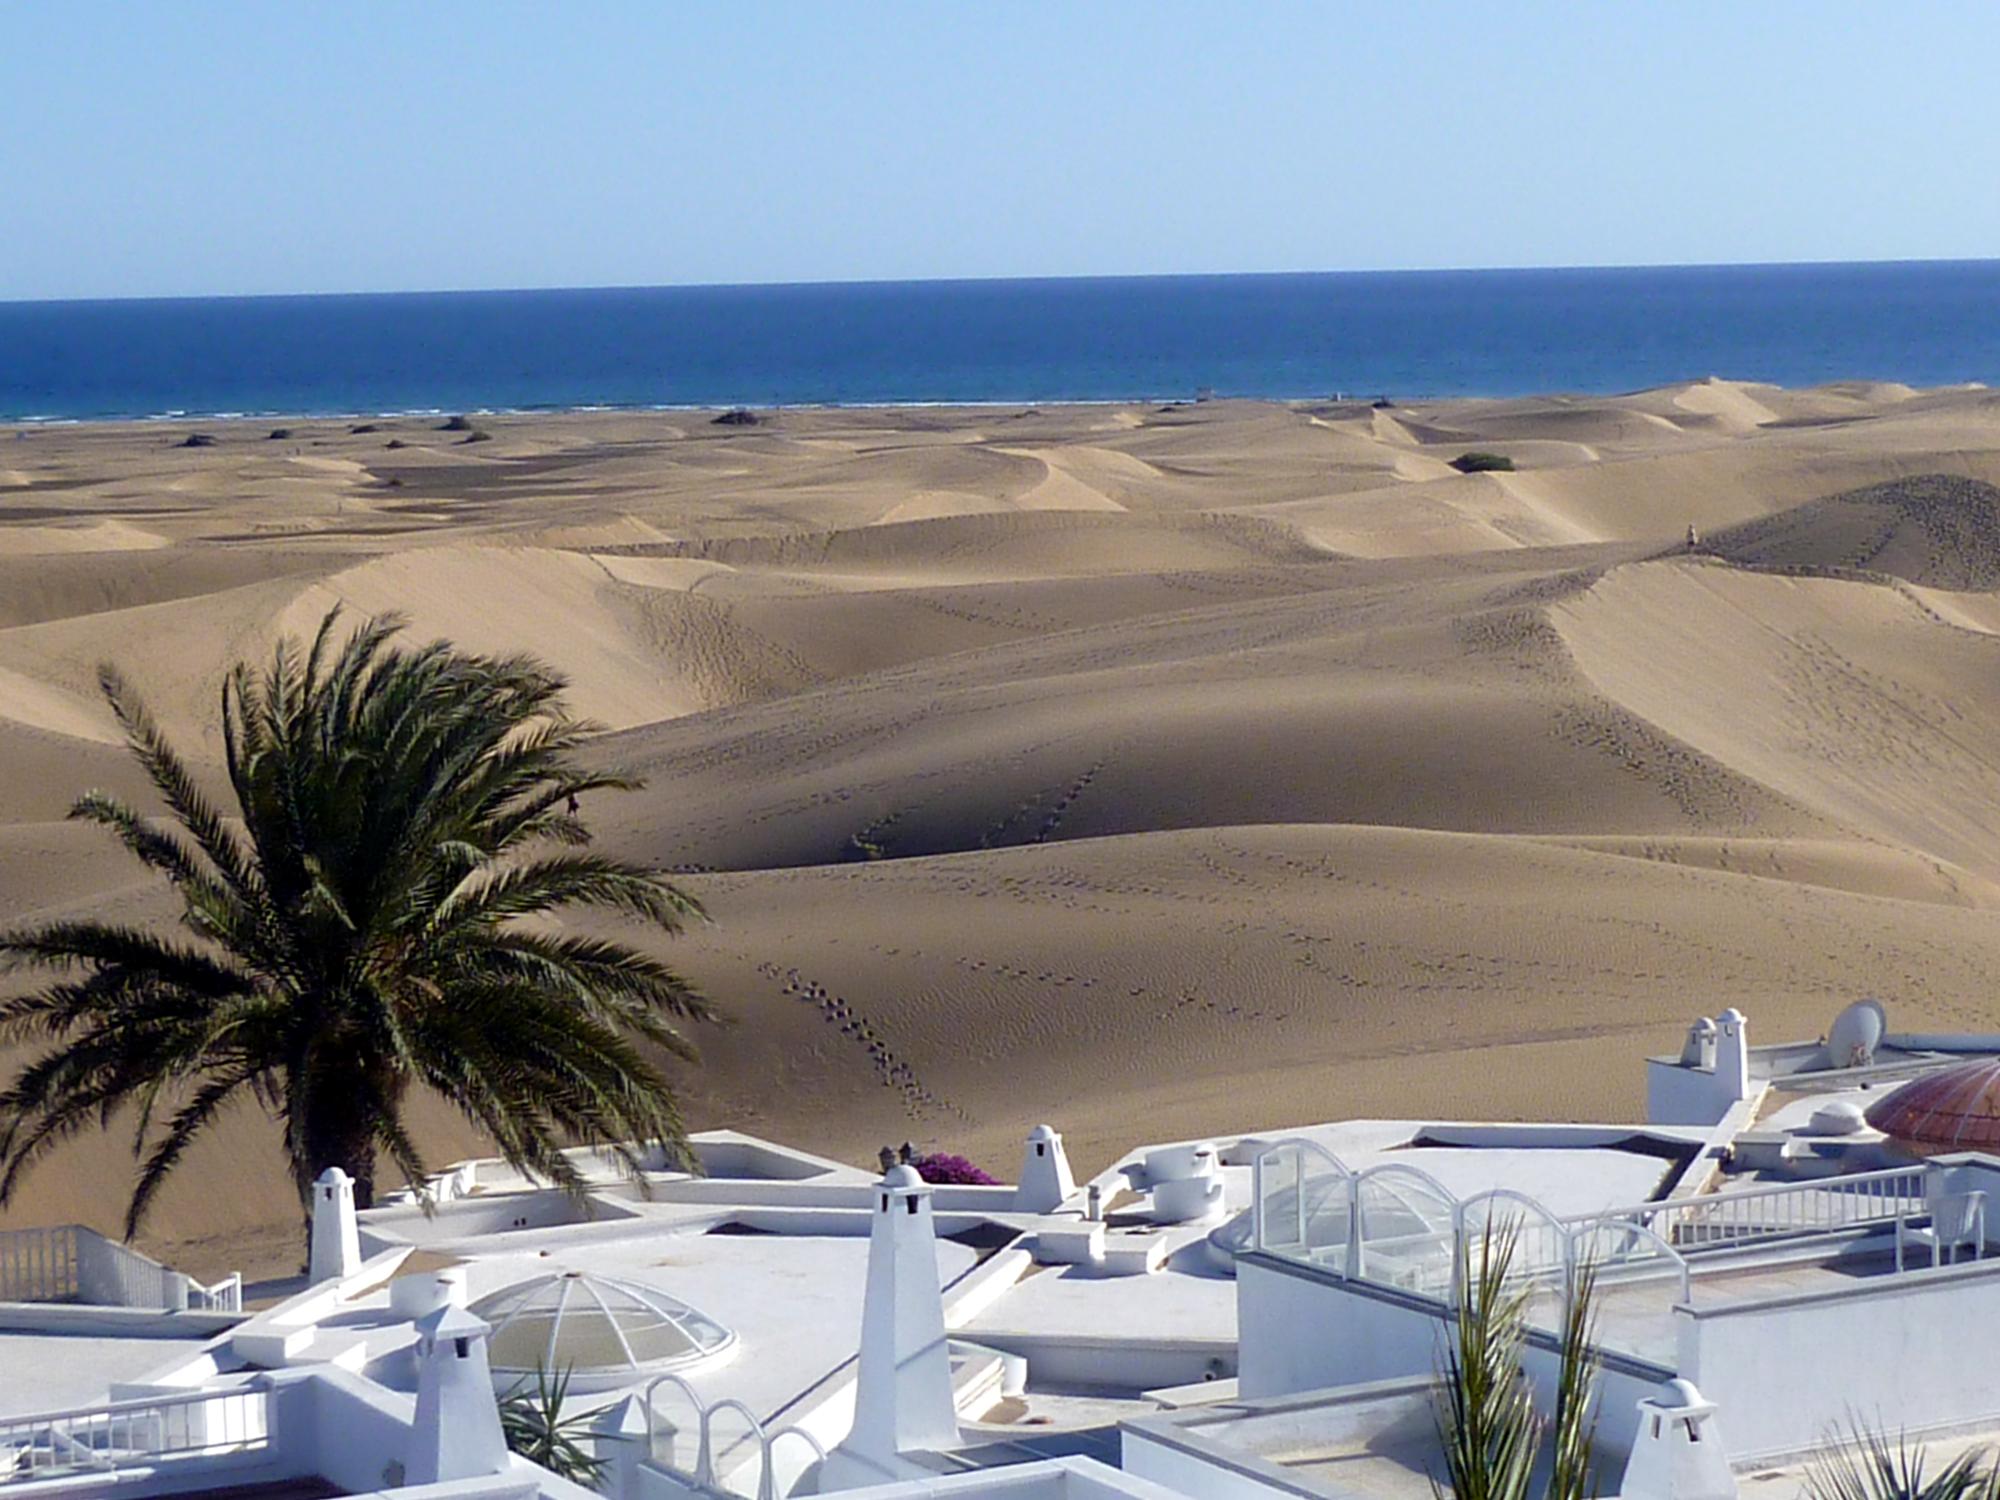  Canary Islands - Dunes #1